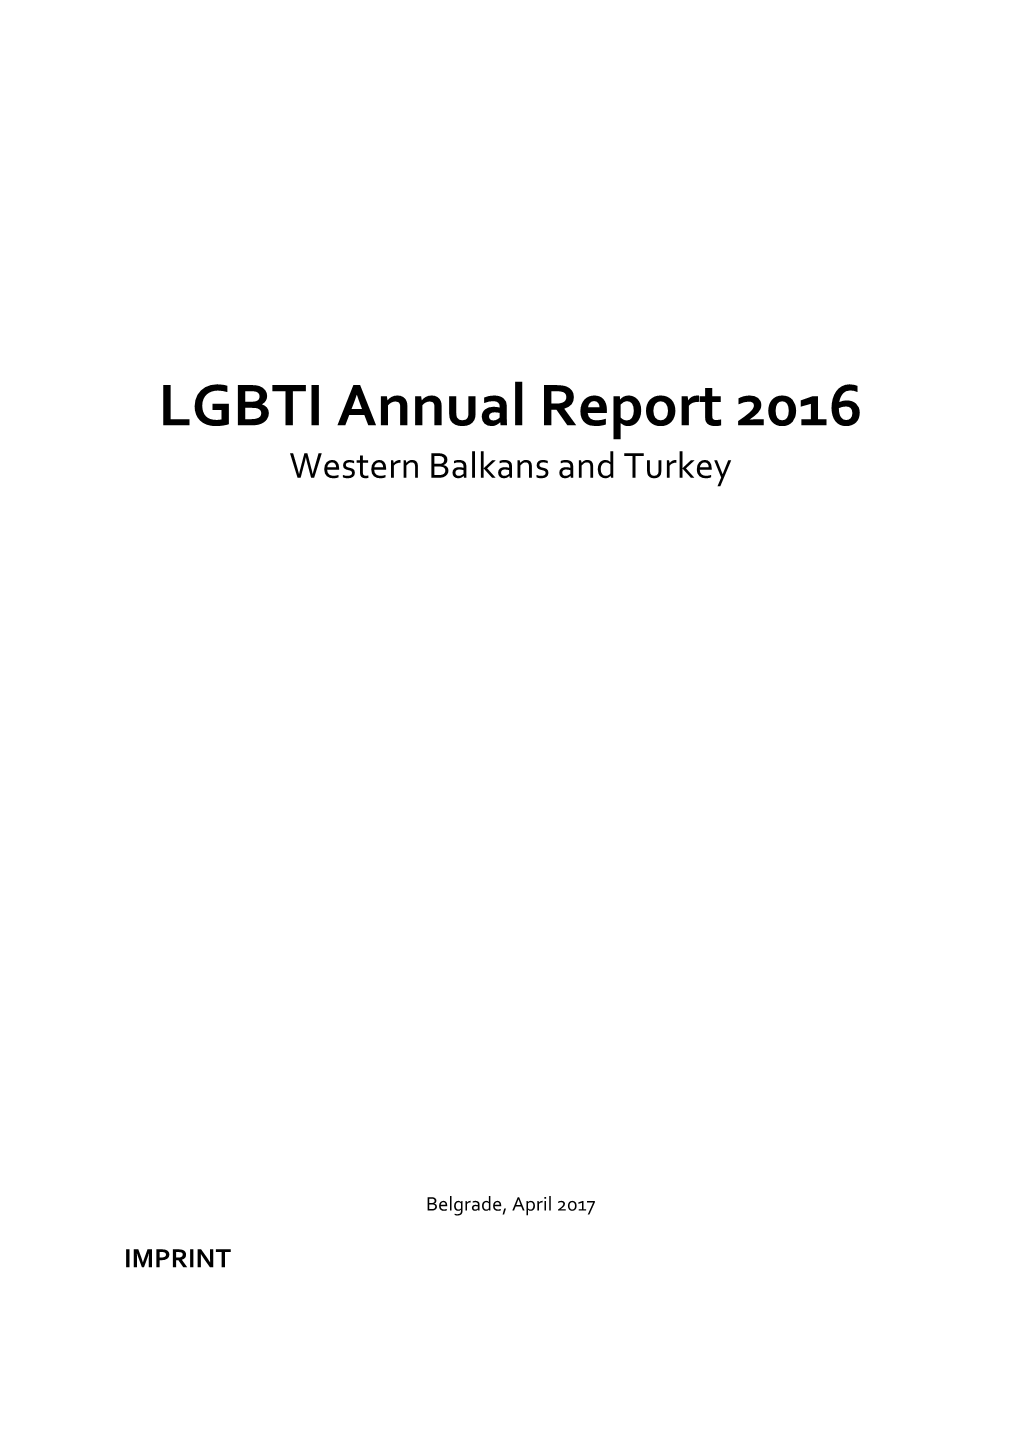 LGBTI Annual Report 2016 Western Balkans and Turkey